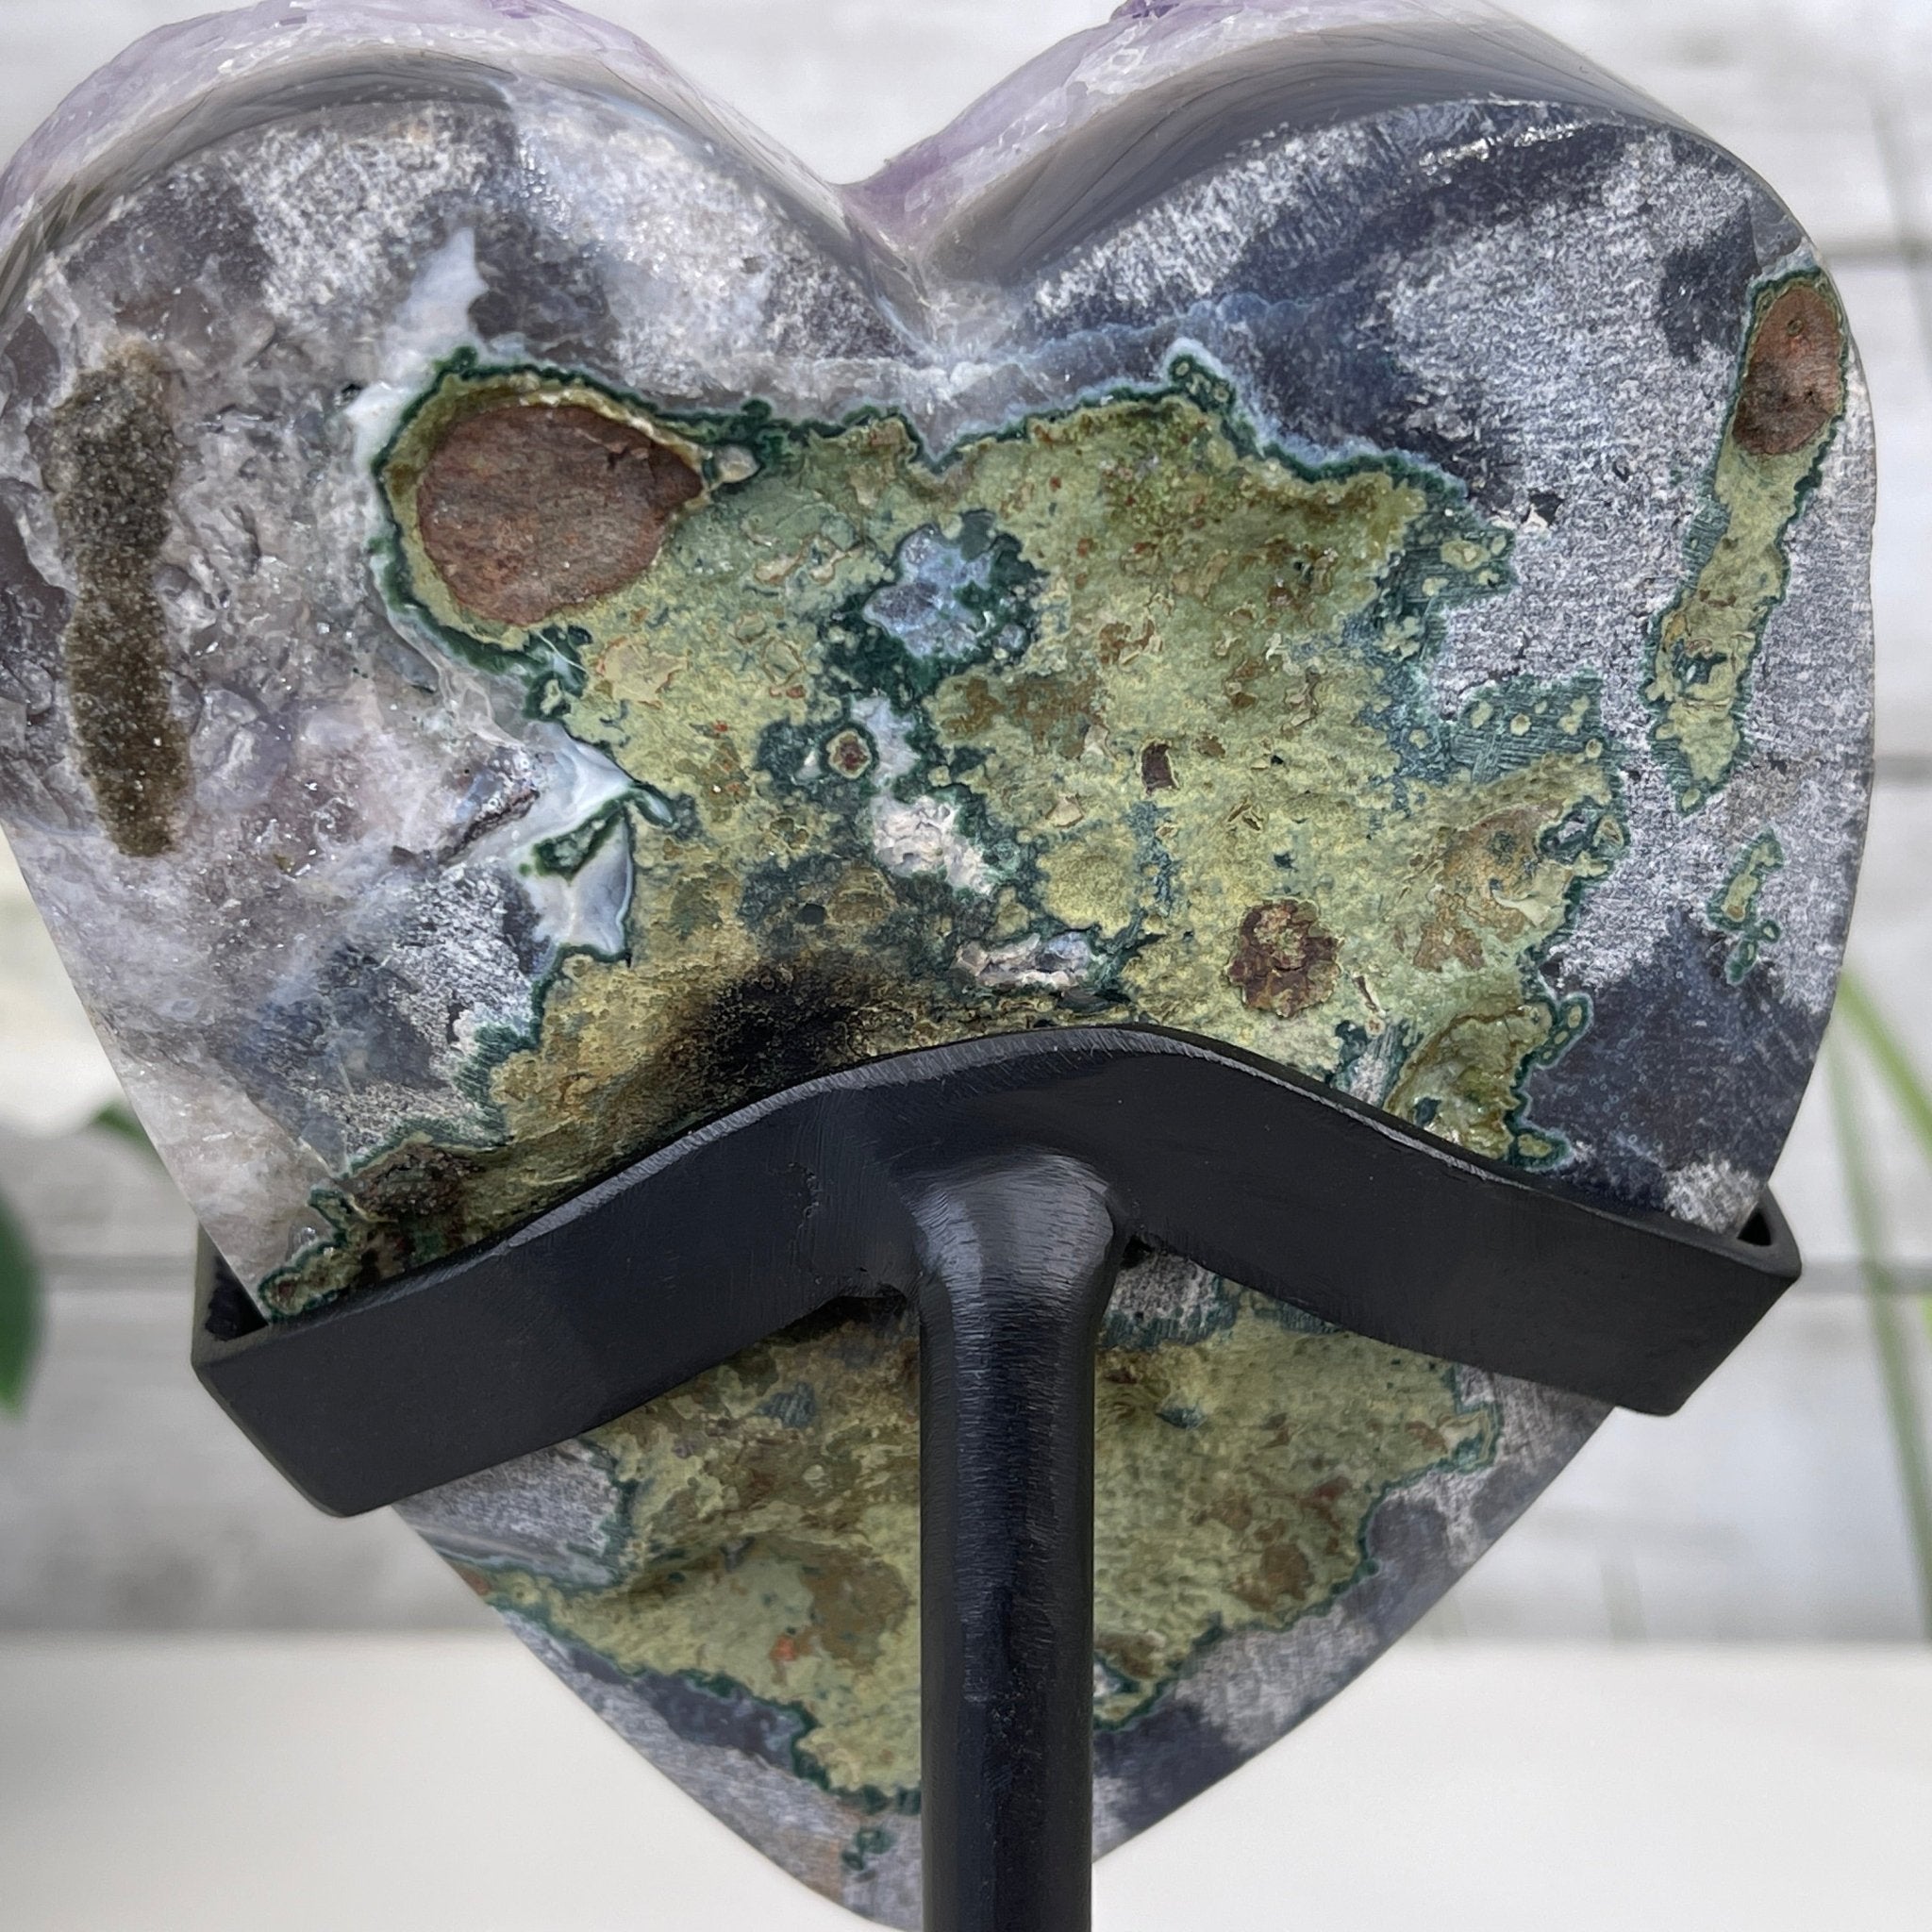 Extra Quality Amethyst Heart Geode, metal & wood stand, 8" Tall & 2.4 lbs #5463-0168 by Brazil Gems - Brazil GemsBrazil GemsExtra Quality Amethyst Heart Geode, metal & wood stand, 8" Tall & 2.4 lbs #5463-0168 by Brazil GemsHearts5463-0168